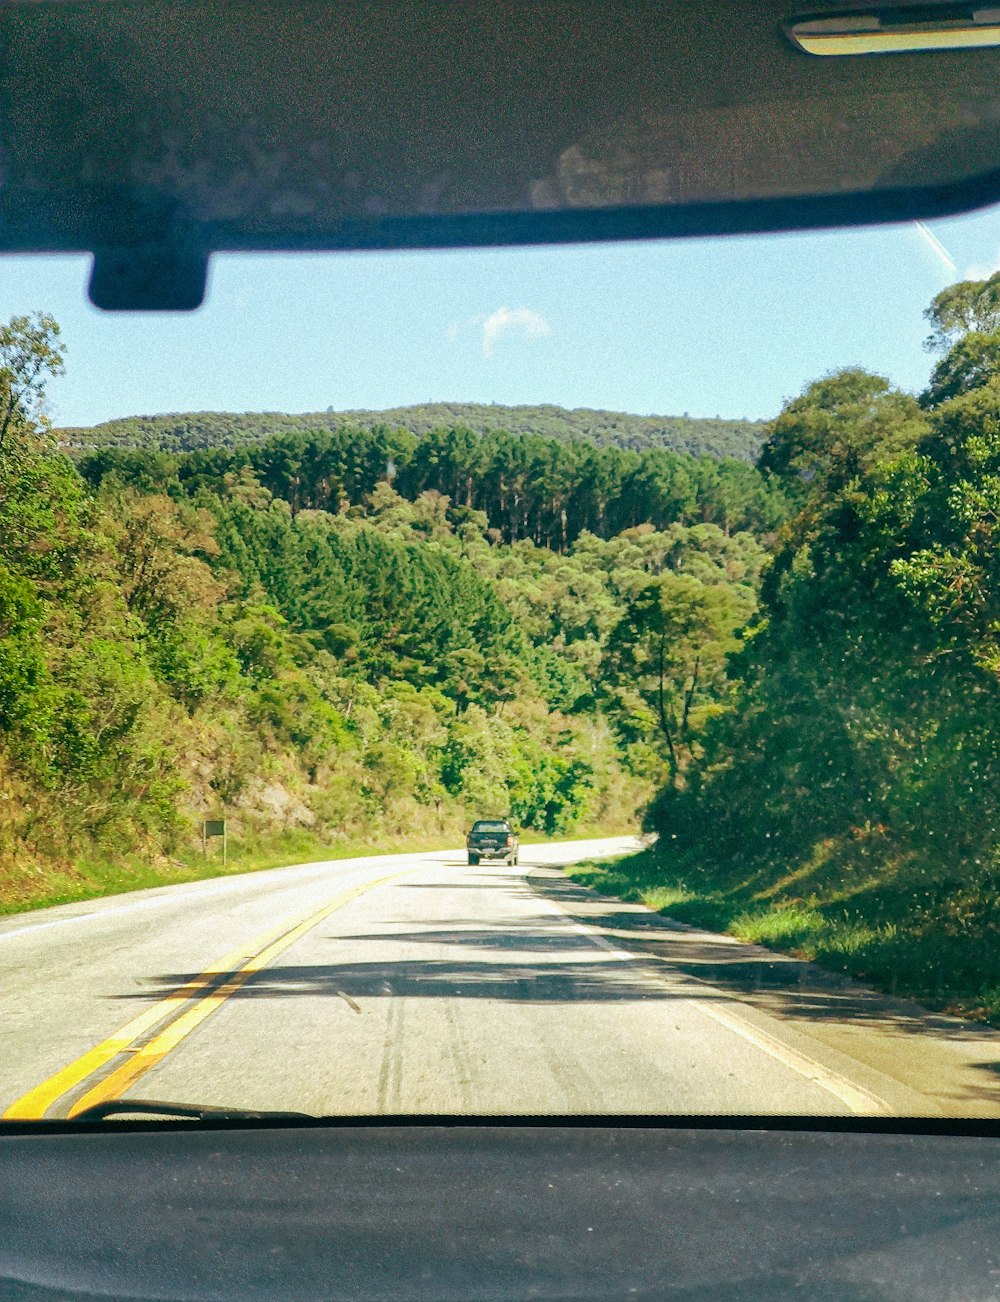 Un coche conduciendo por una carretera junto a un frondoso bosque verde